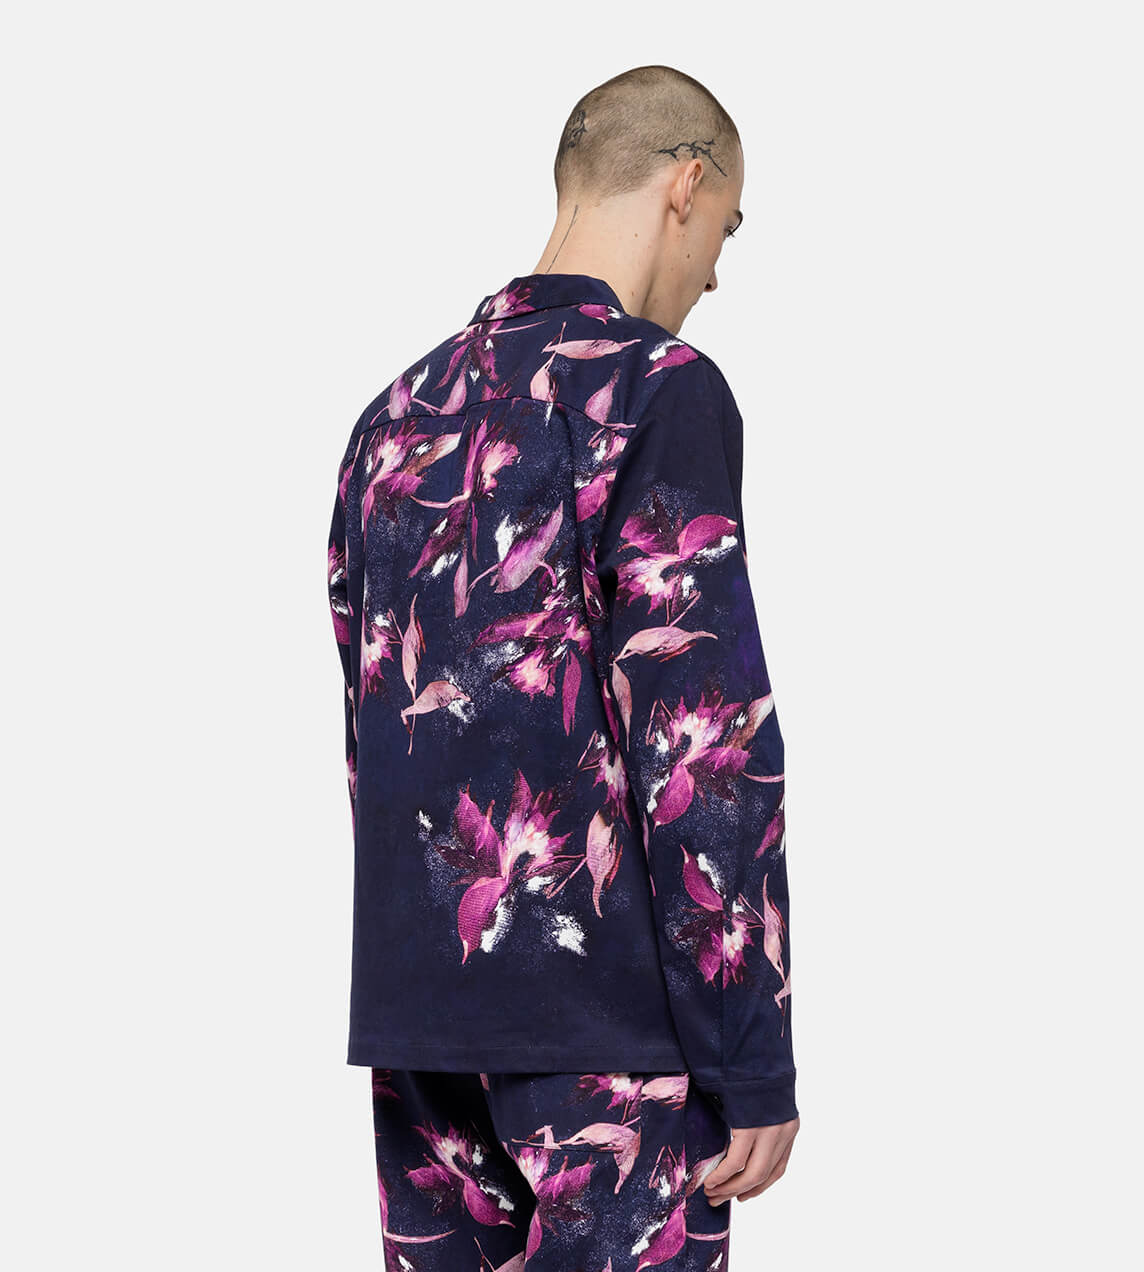 DAVI - Fuschia Placed Print Floral Shirt